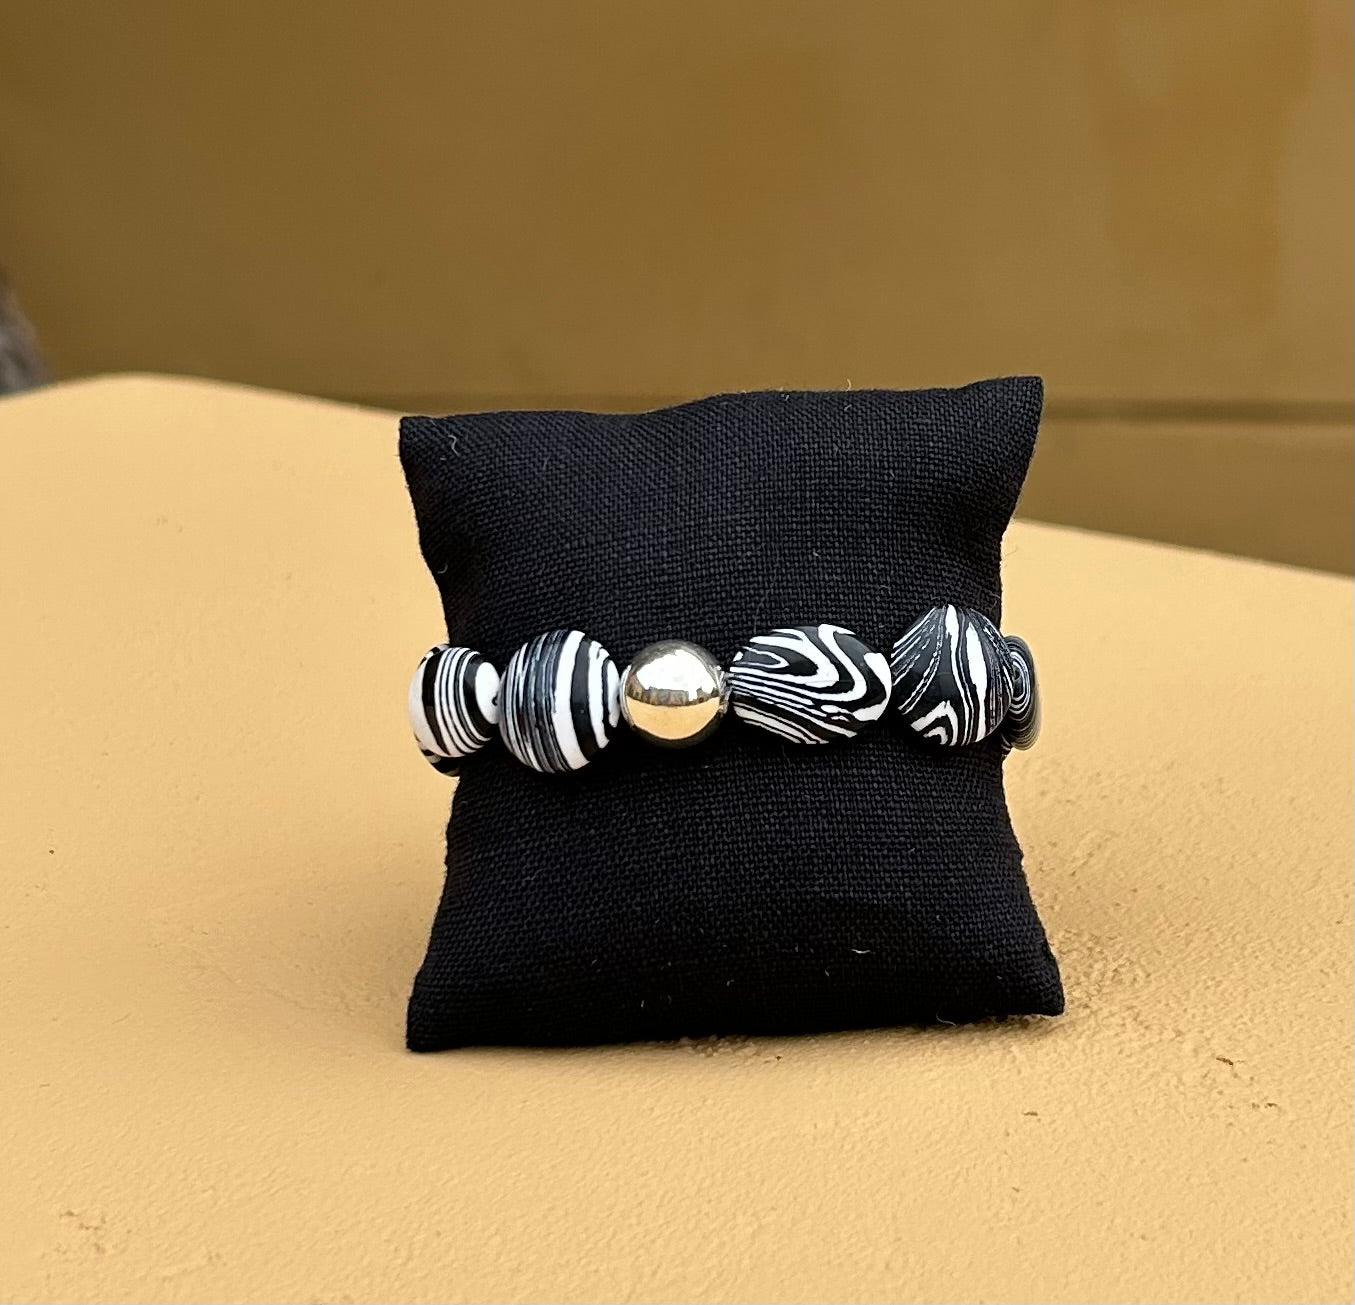 Bracelet - Black and white stretch bracelet with sterling silver